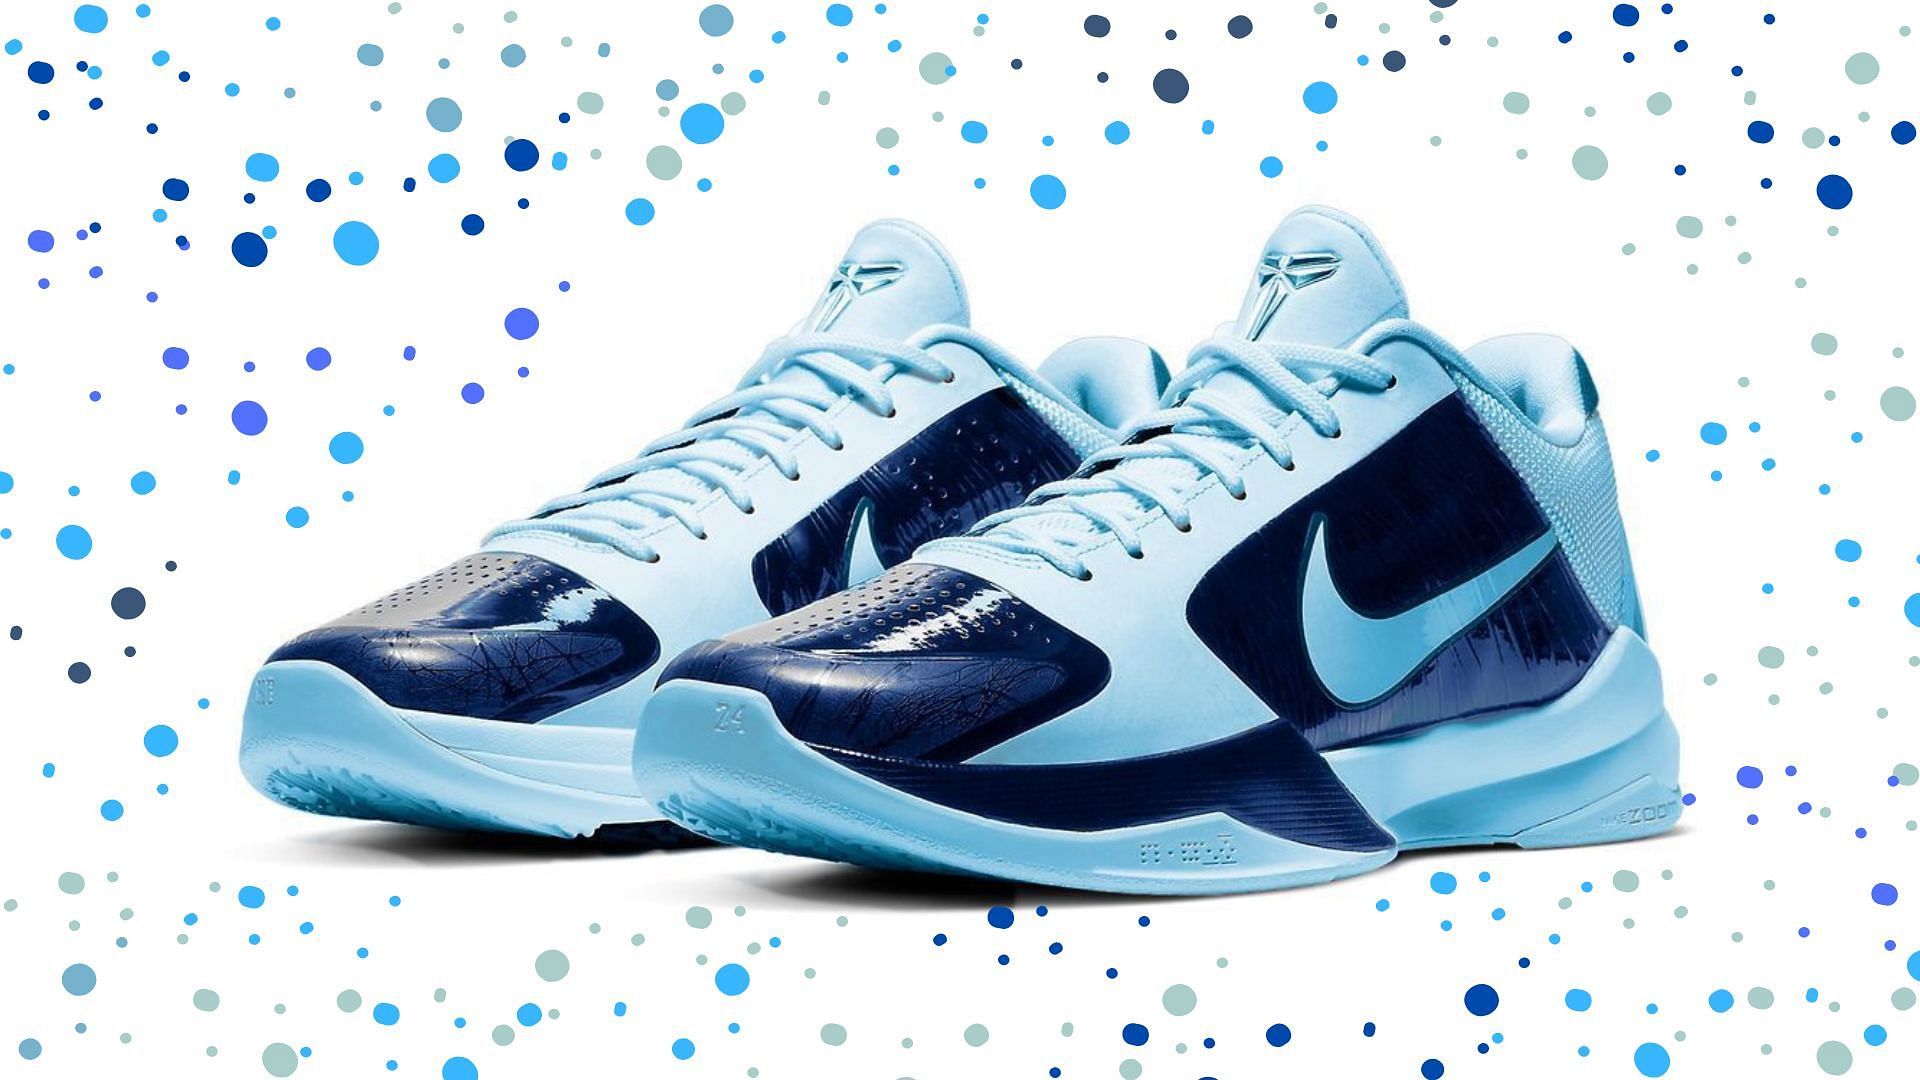 Nike Kobe 5 Protro Deep Royal Blue sneakers (Image via YouTube/@ragnoupdates)